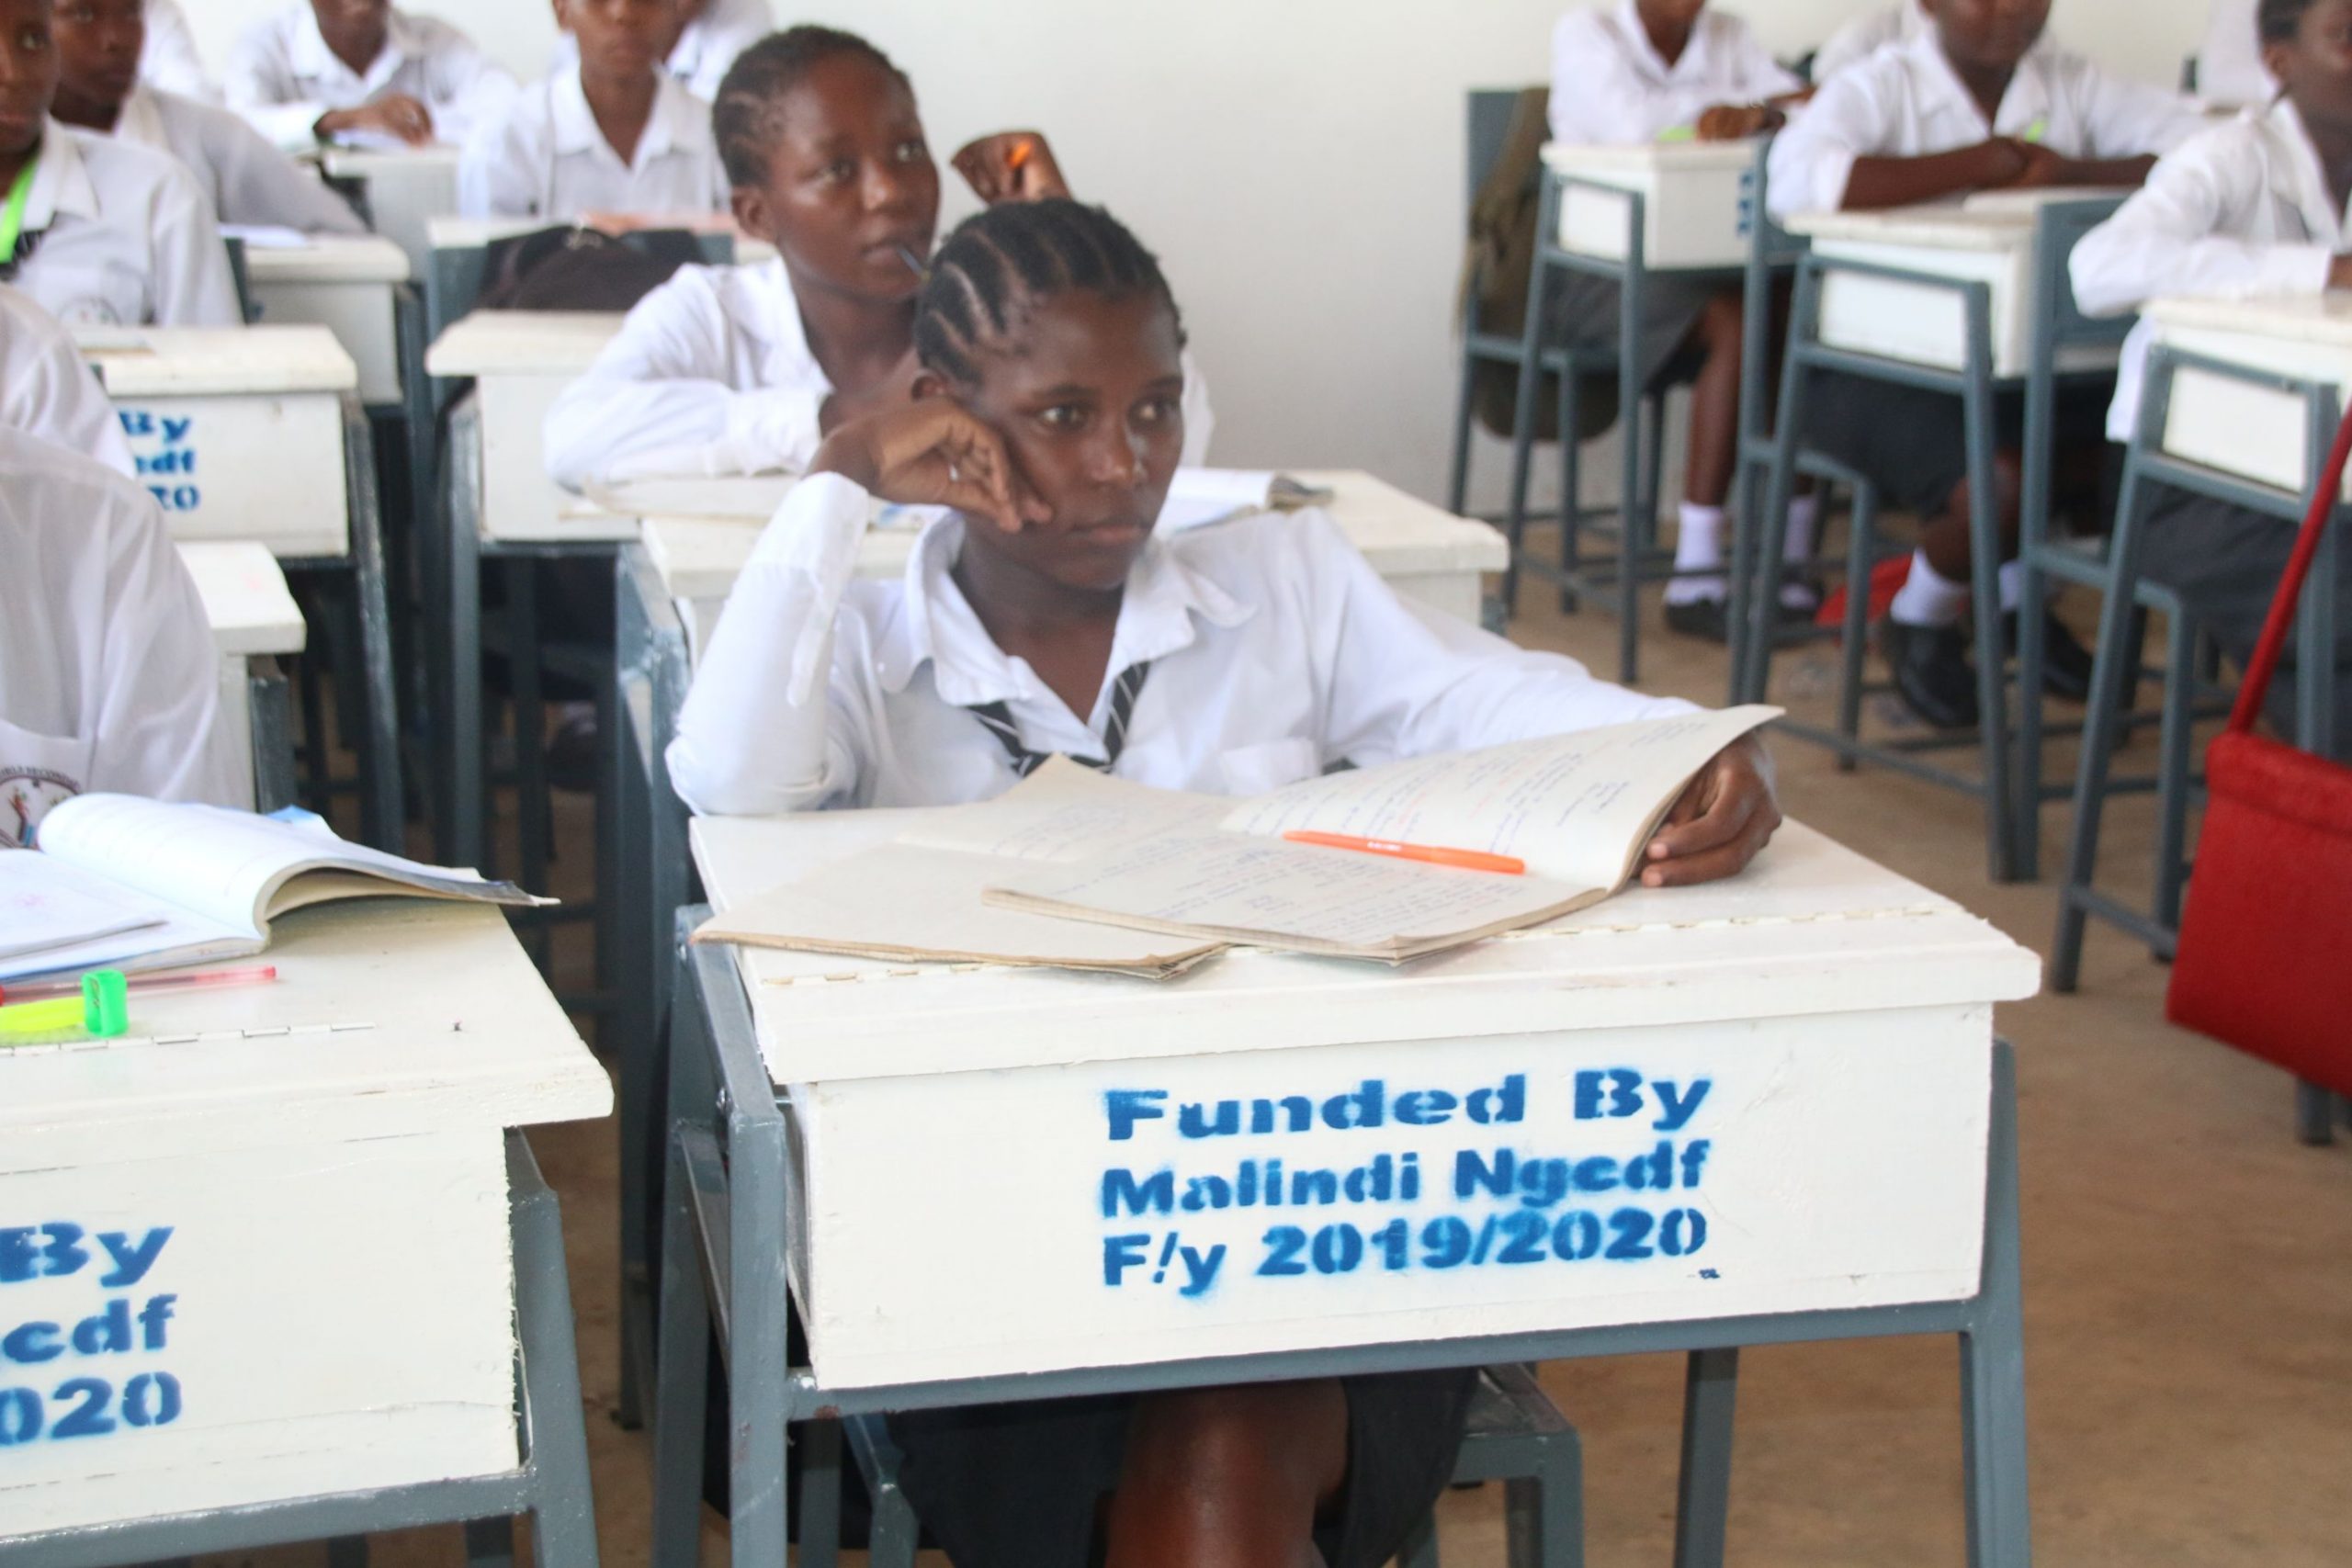 https://malindi.ngcdf.go.ke/wp-content/uploads/2021/09/Supply-of-desks-at-Shomani-Girls-sec-school-scaled.jpg